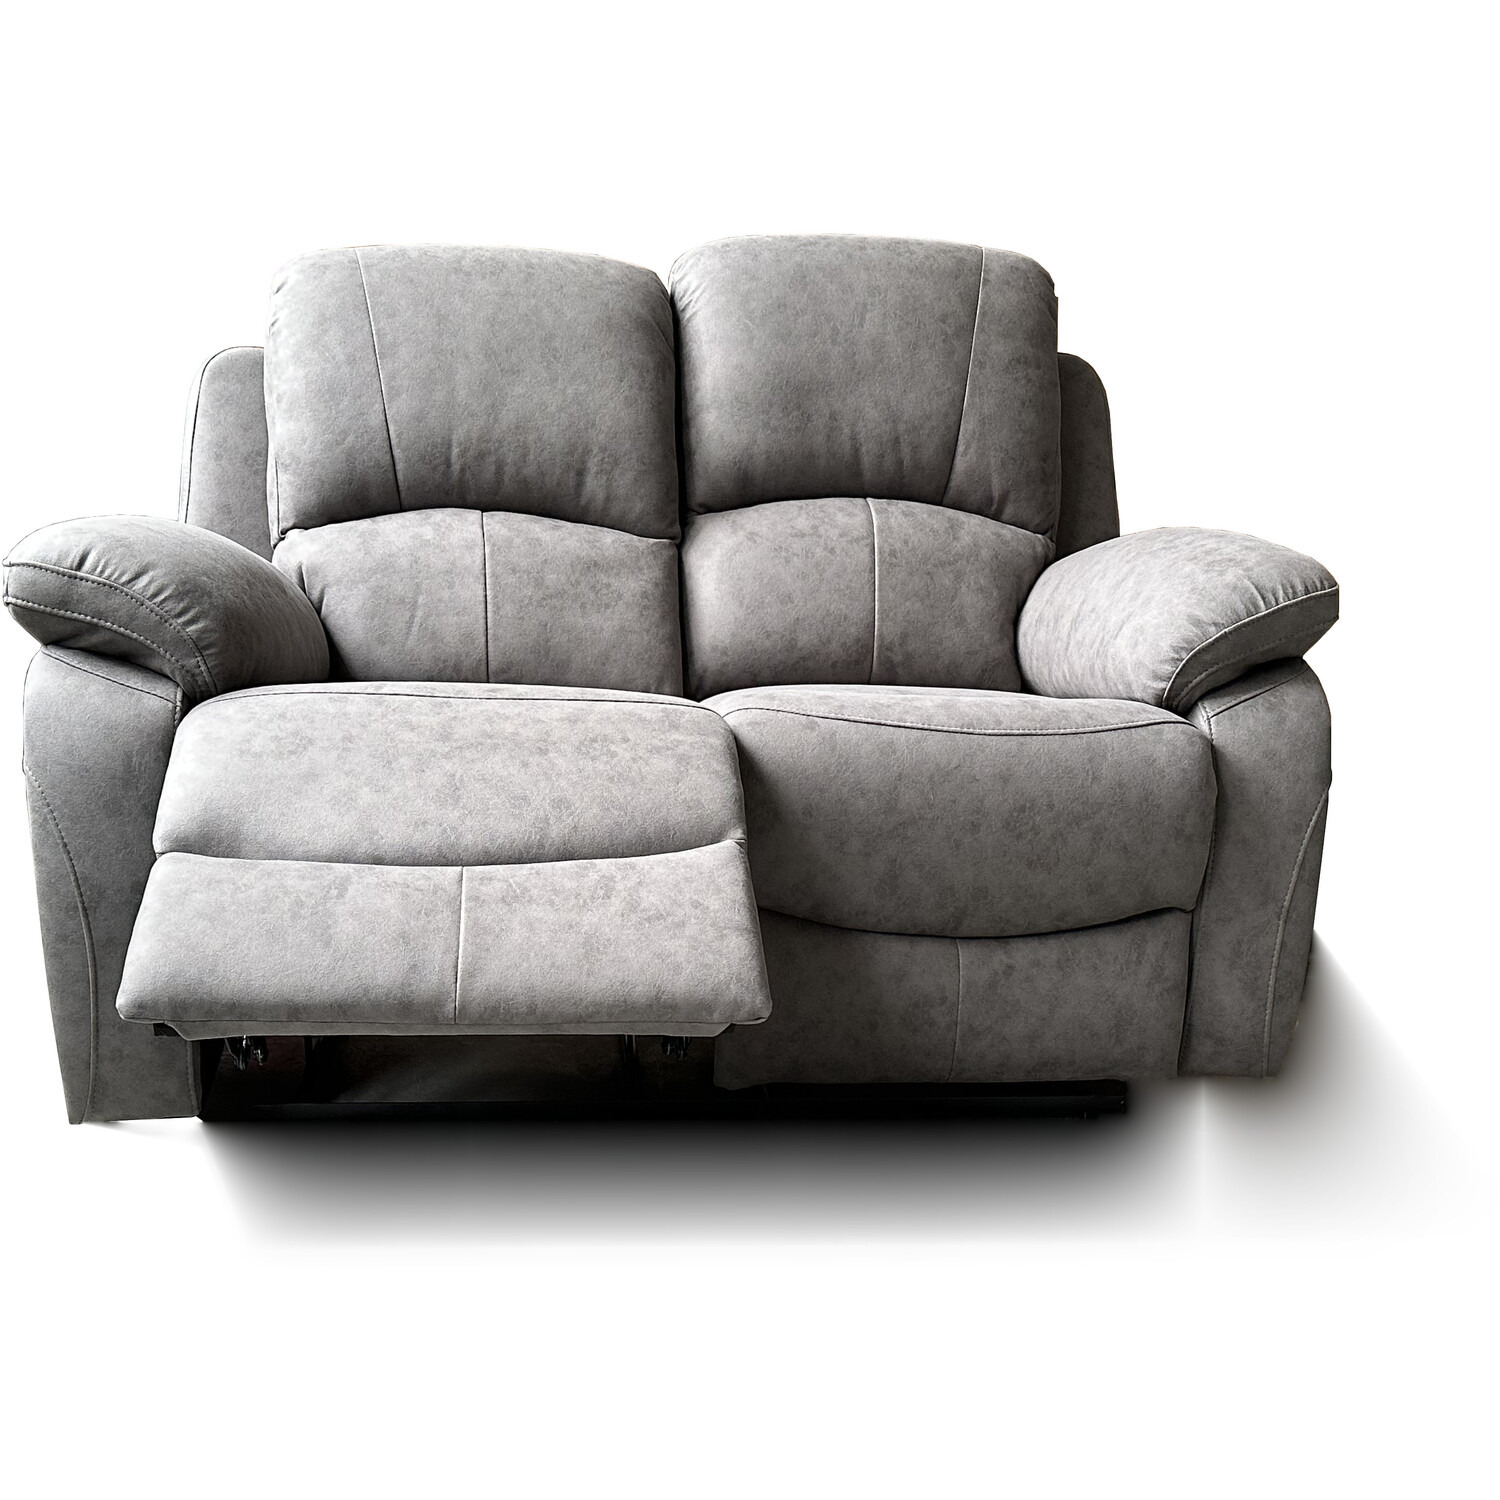 Milano 2 Seater Charcoal Fabric Manual Recliner Sofa Image 4